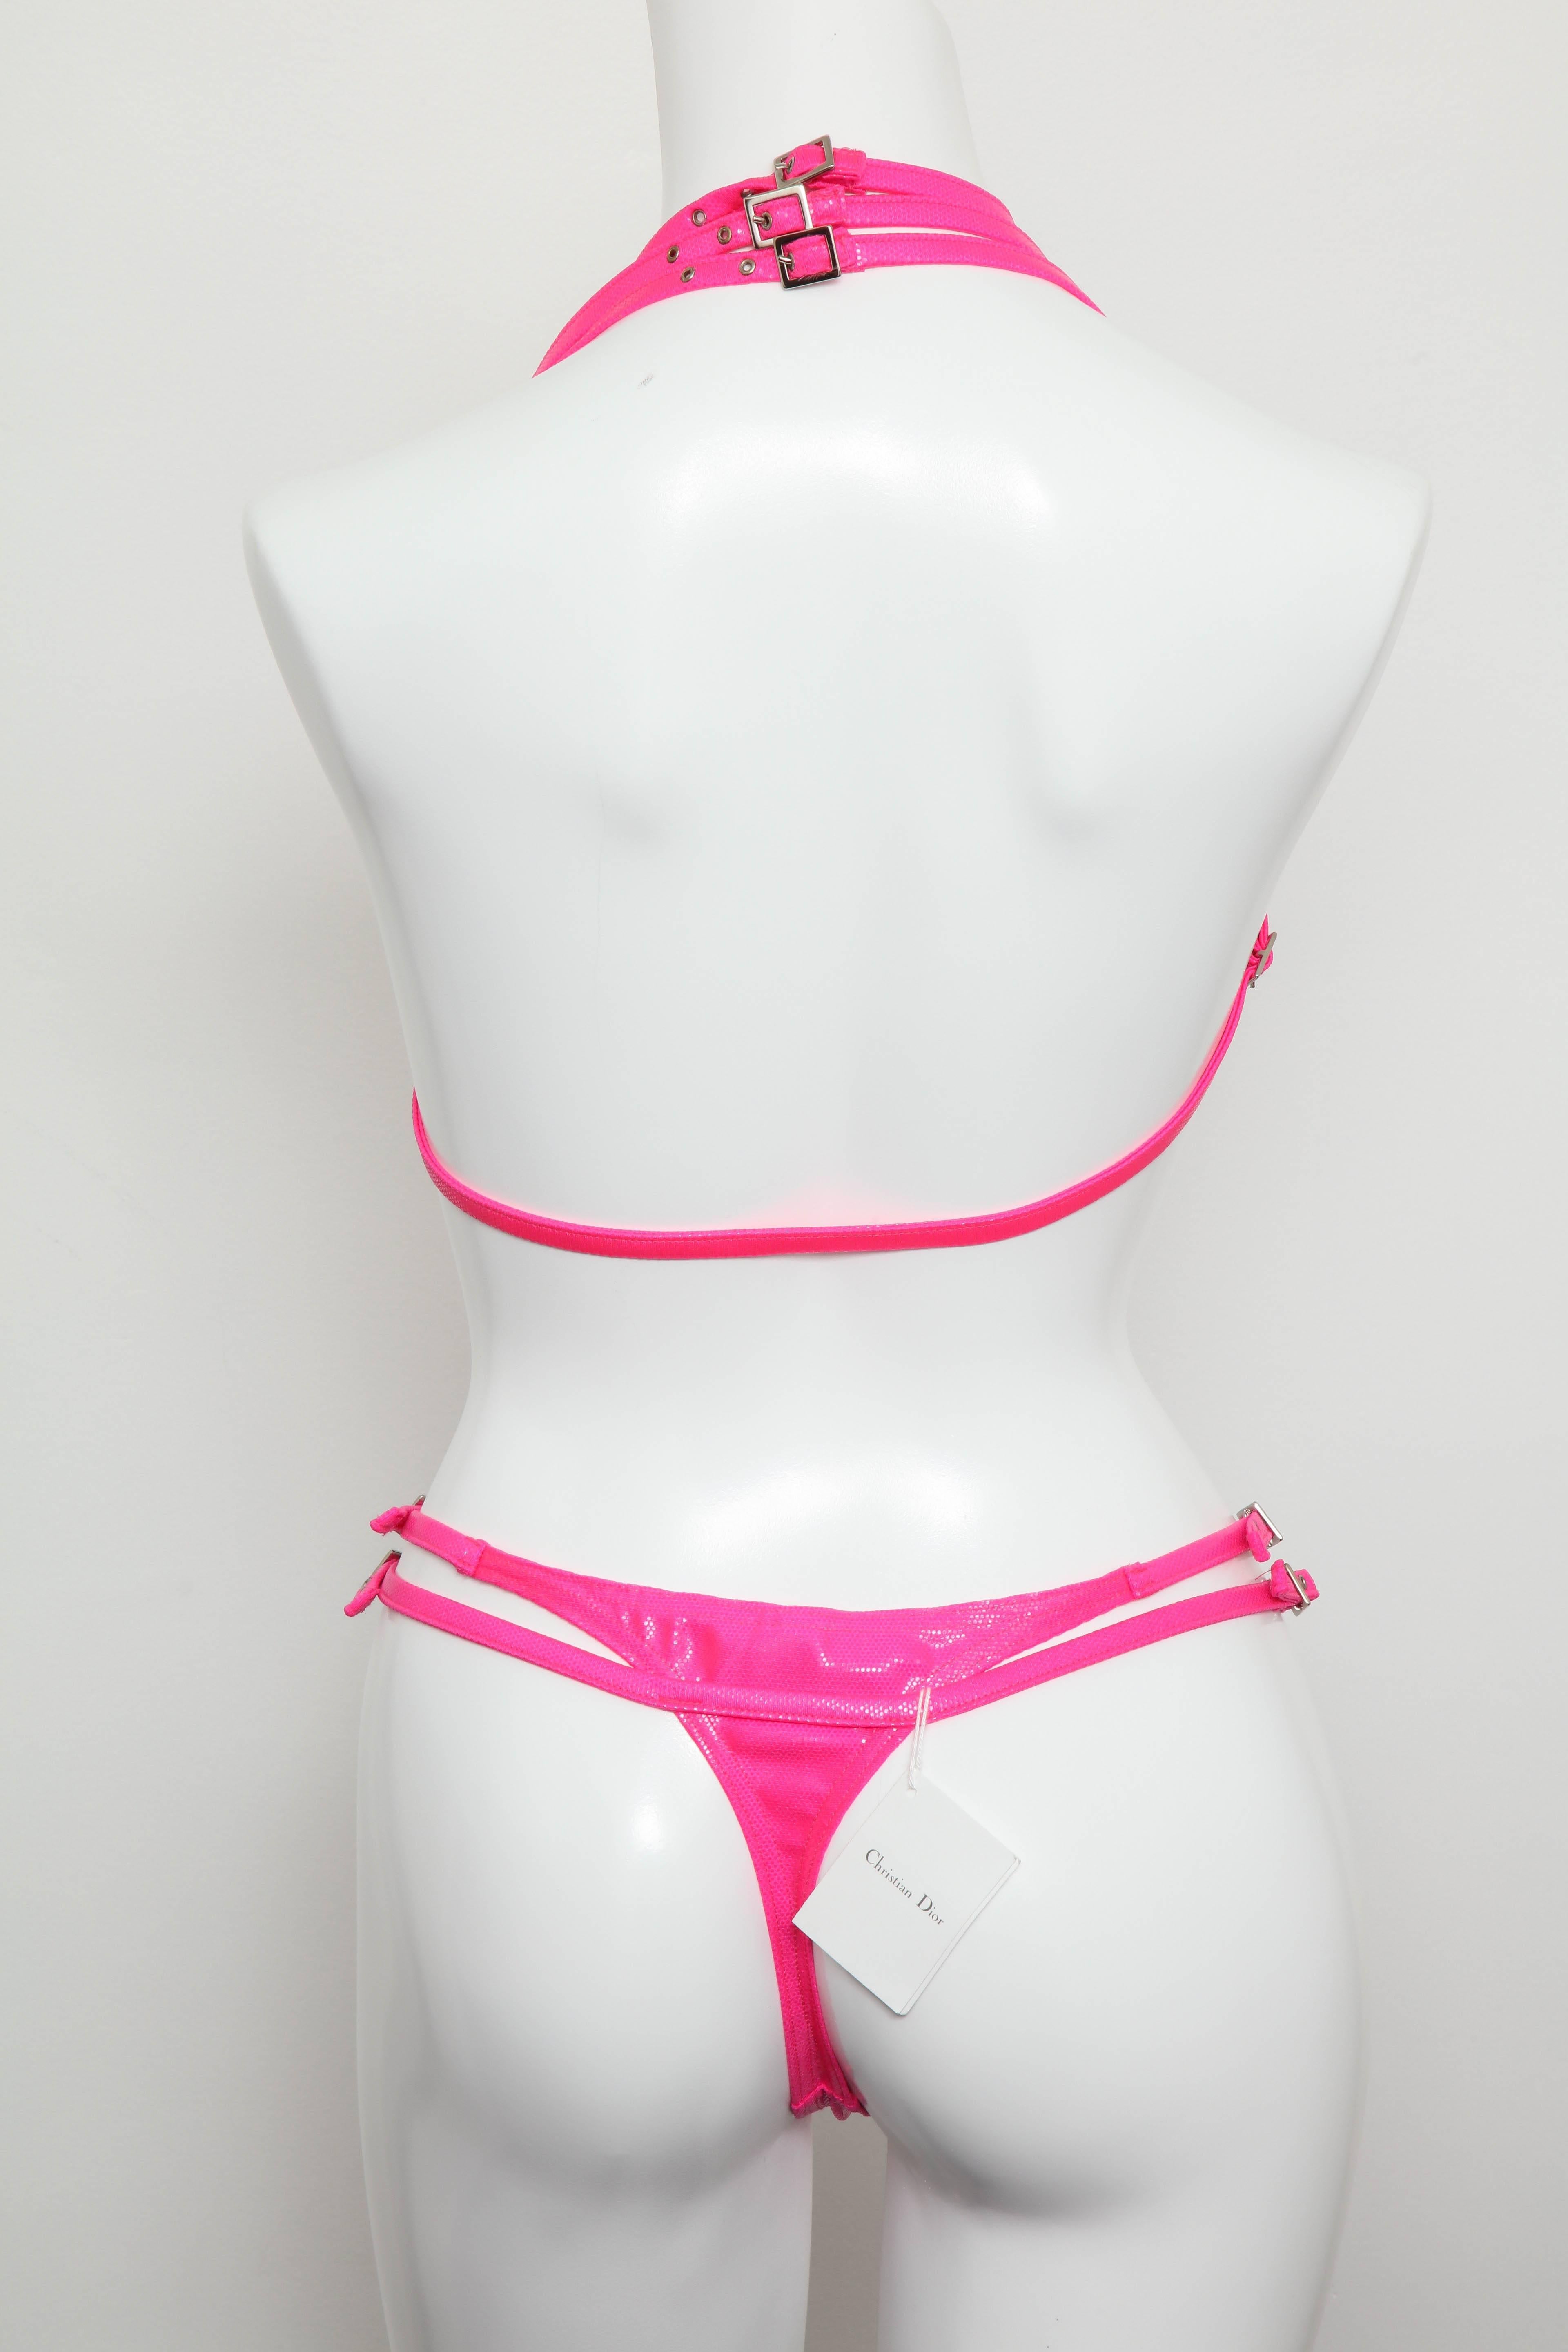 John Galliano for Christian Dior Pink Bikini In Excellent Condition For Sale In Chicago, IL